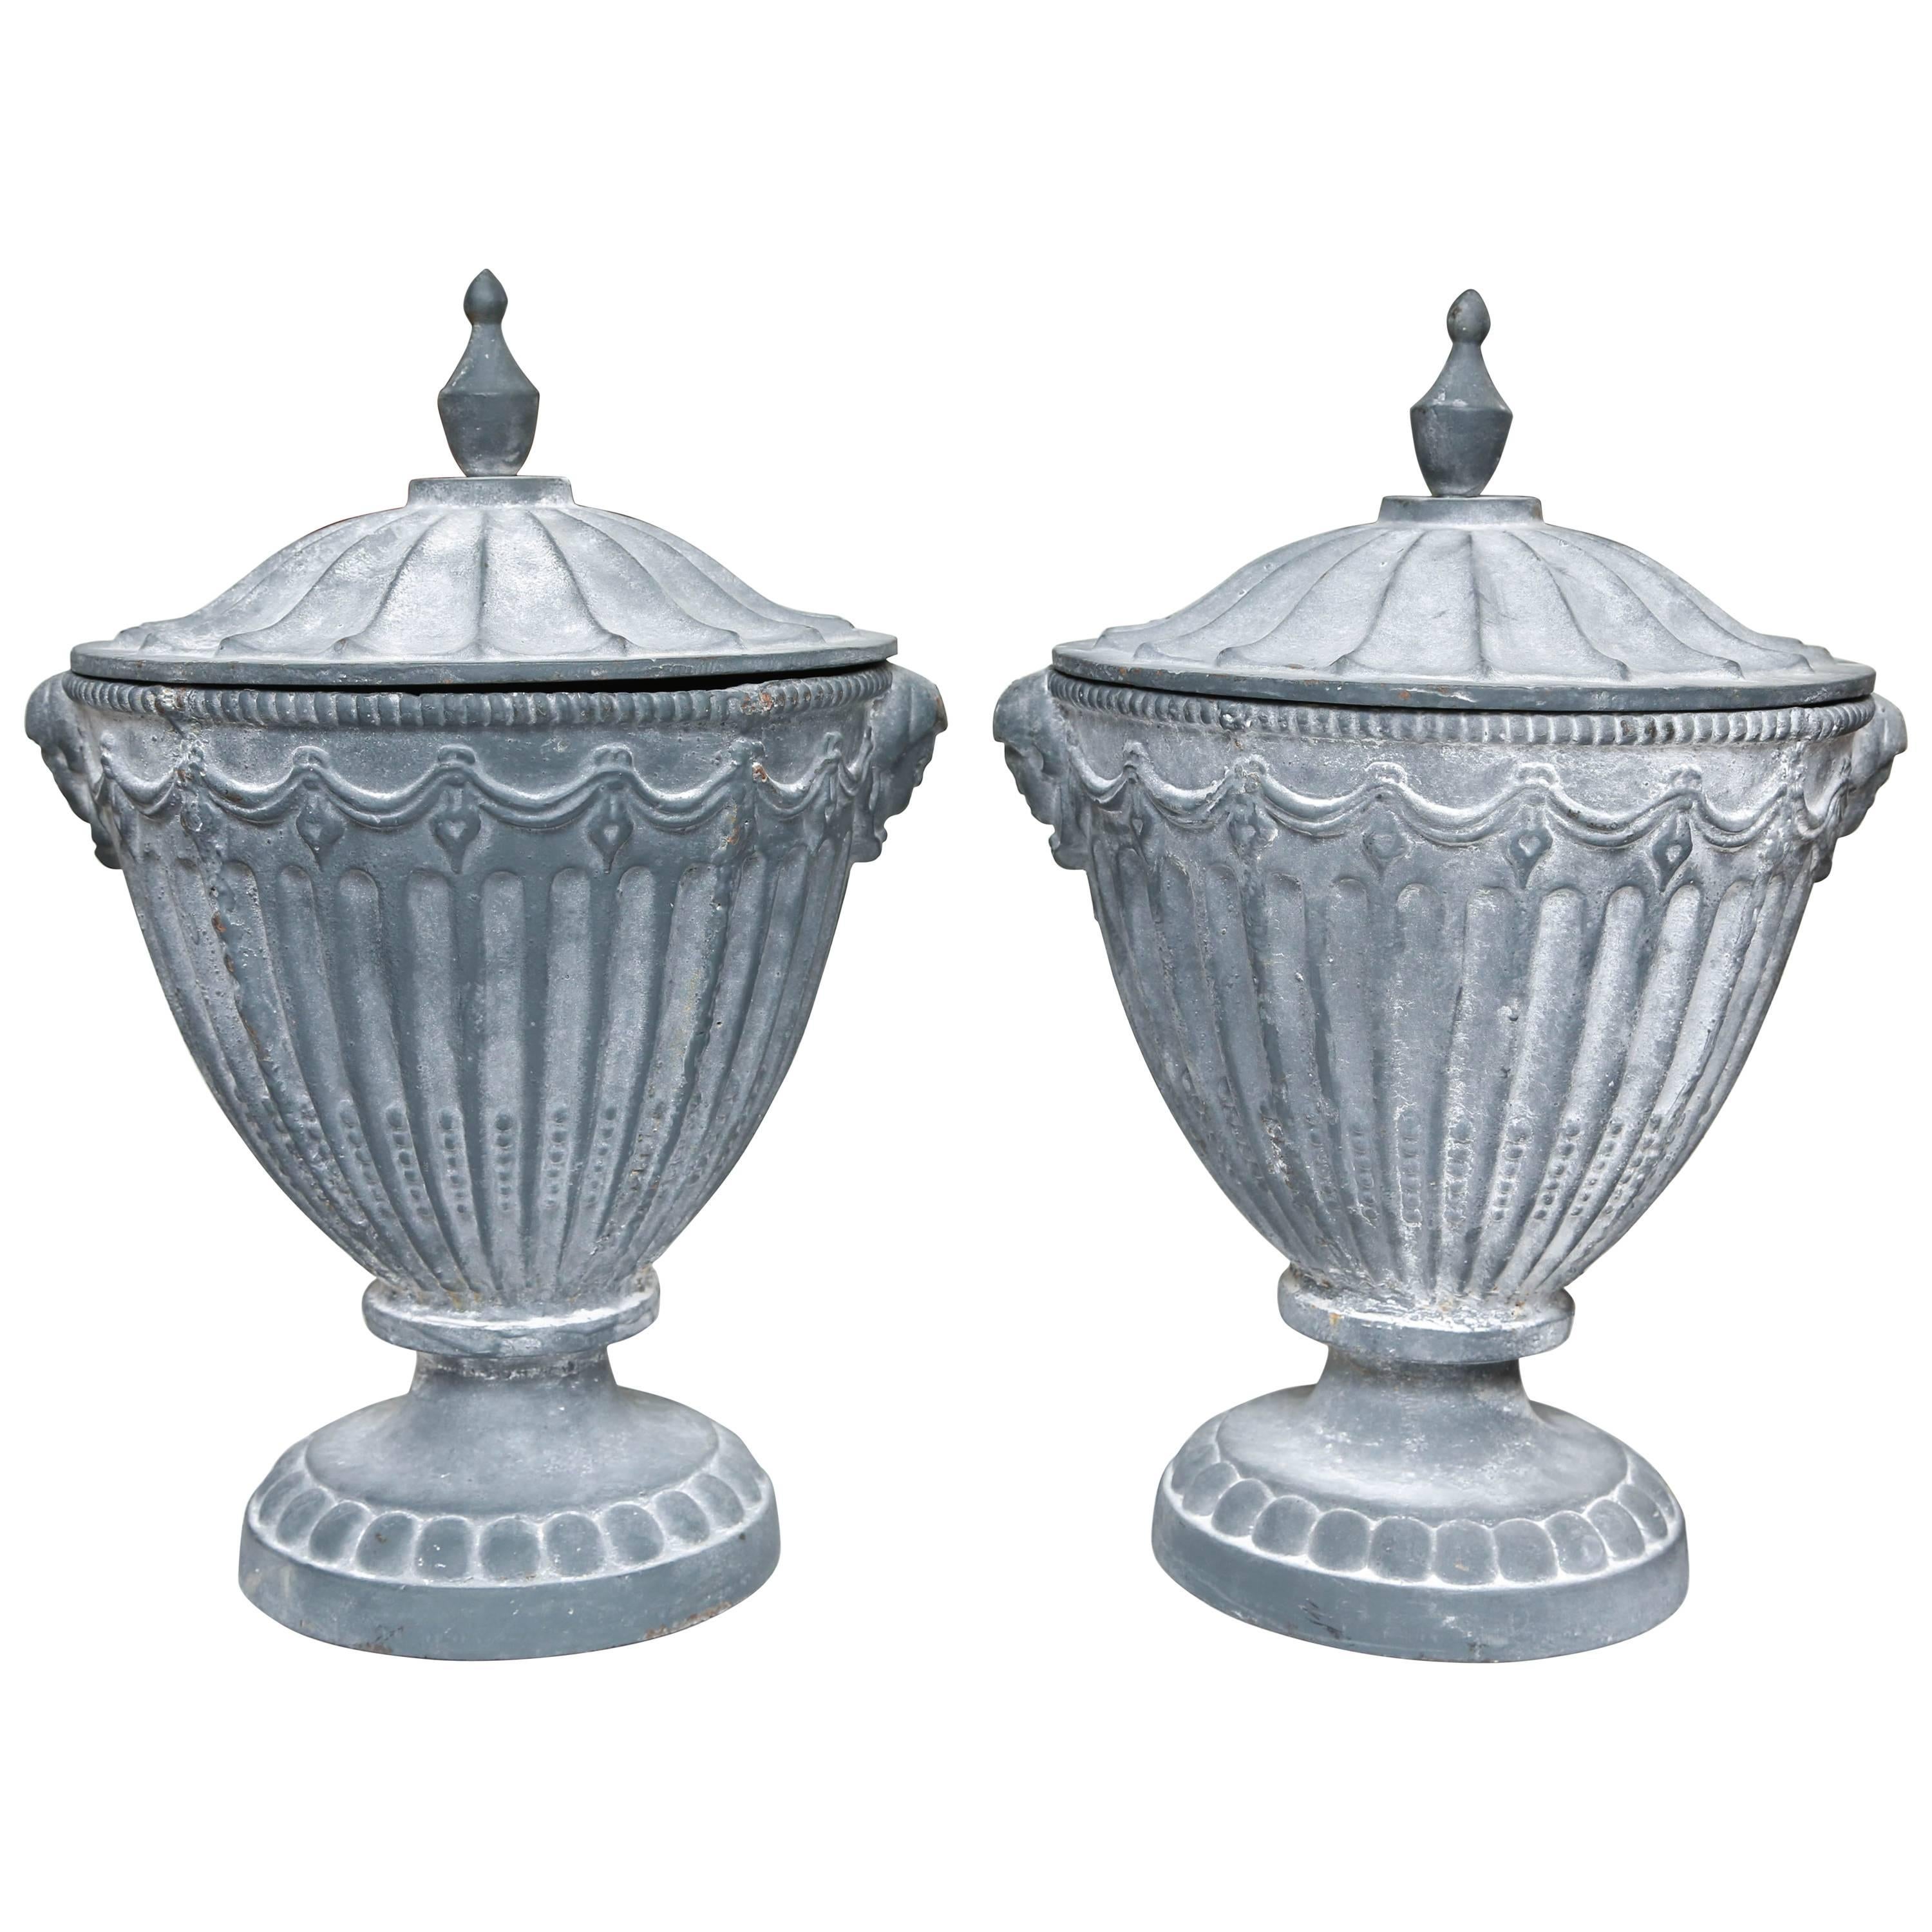 Pair of Covered Neoclassic Iron Garden Urns